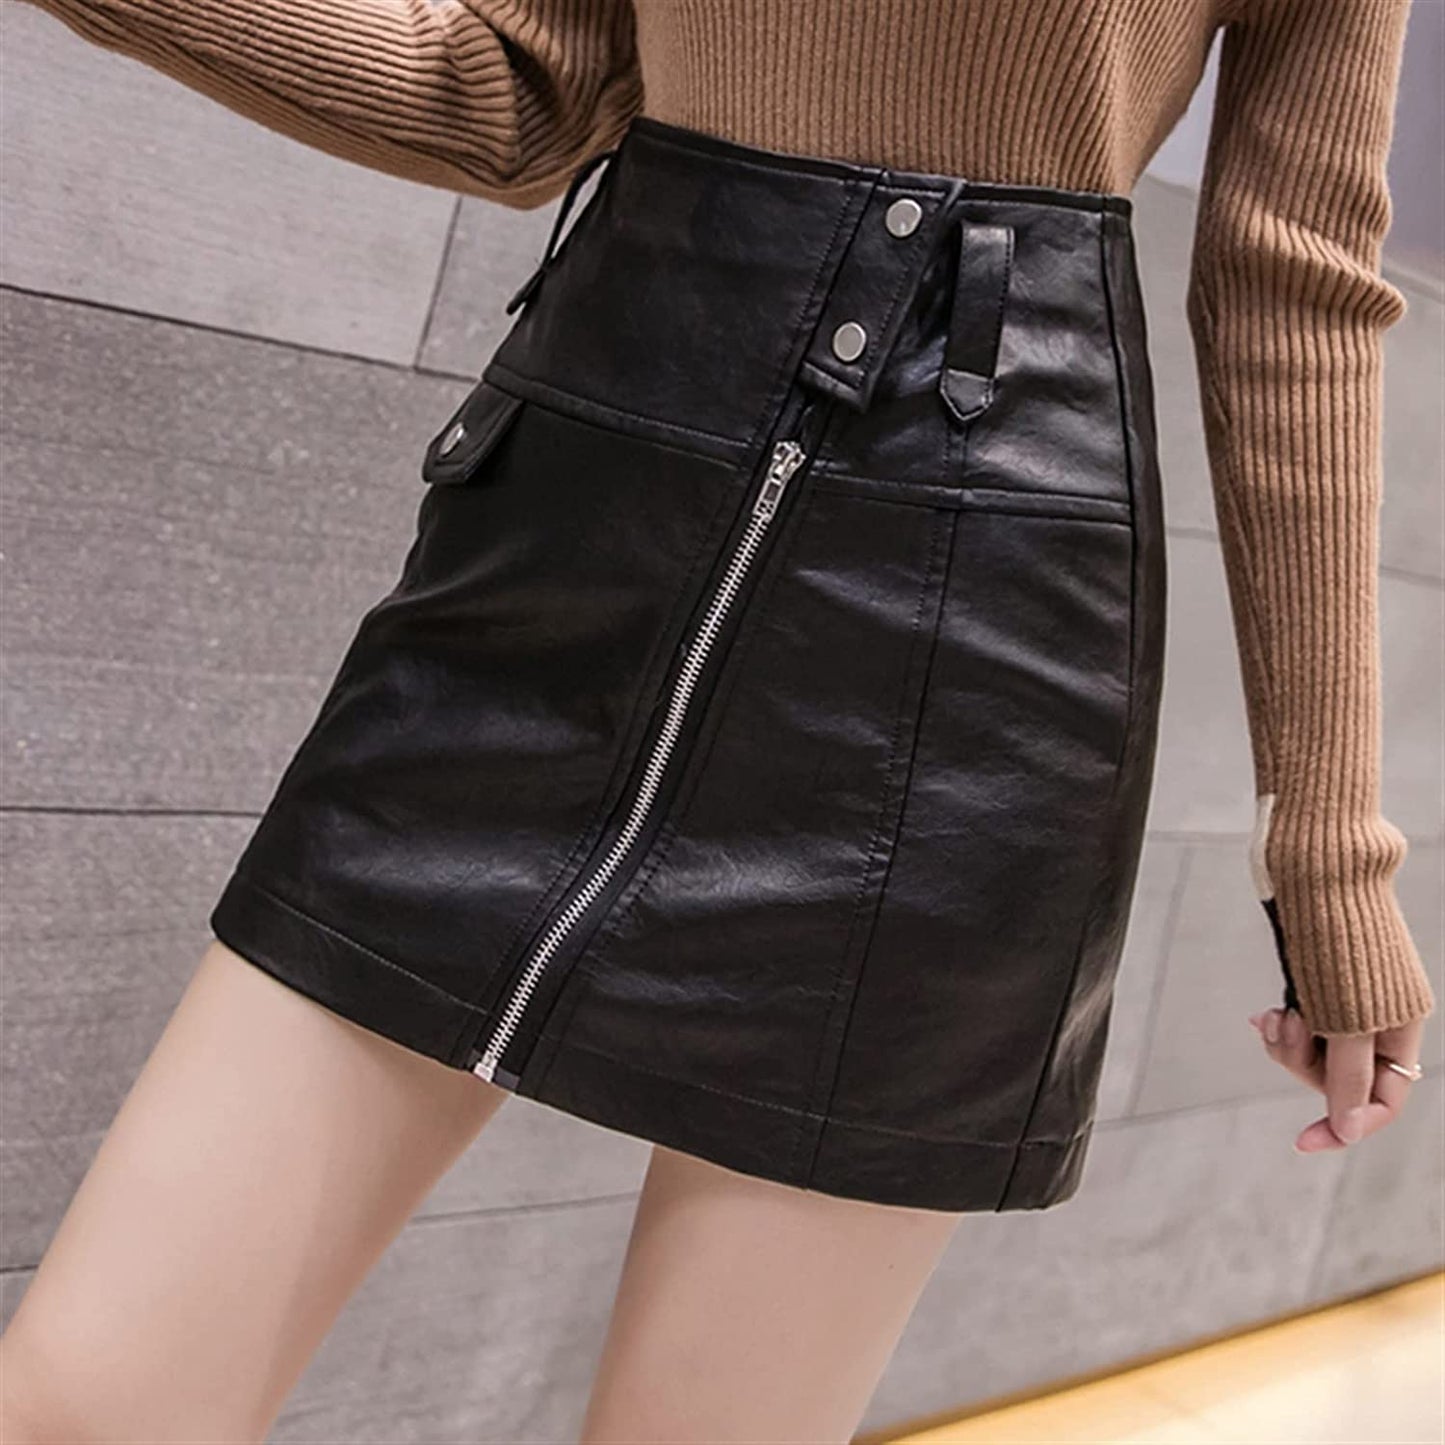 Oblique Zipper Black Leather Skirt